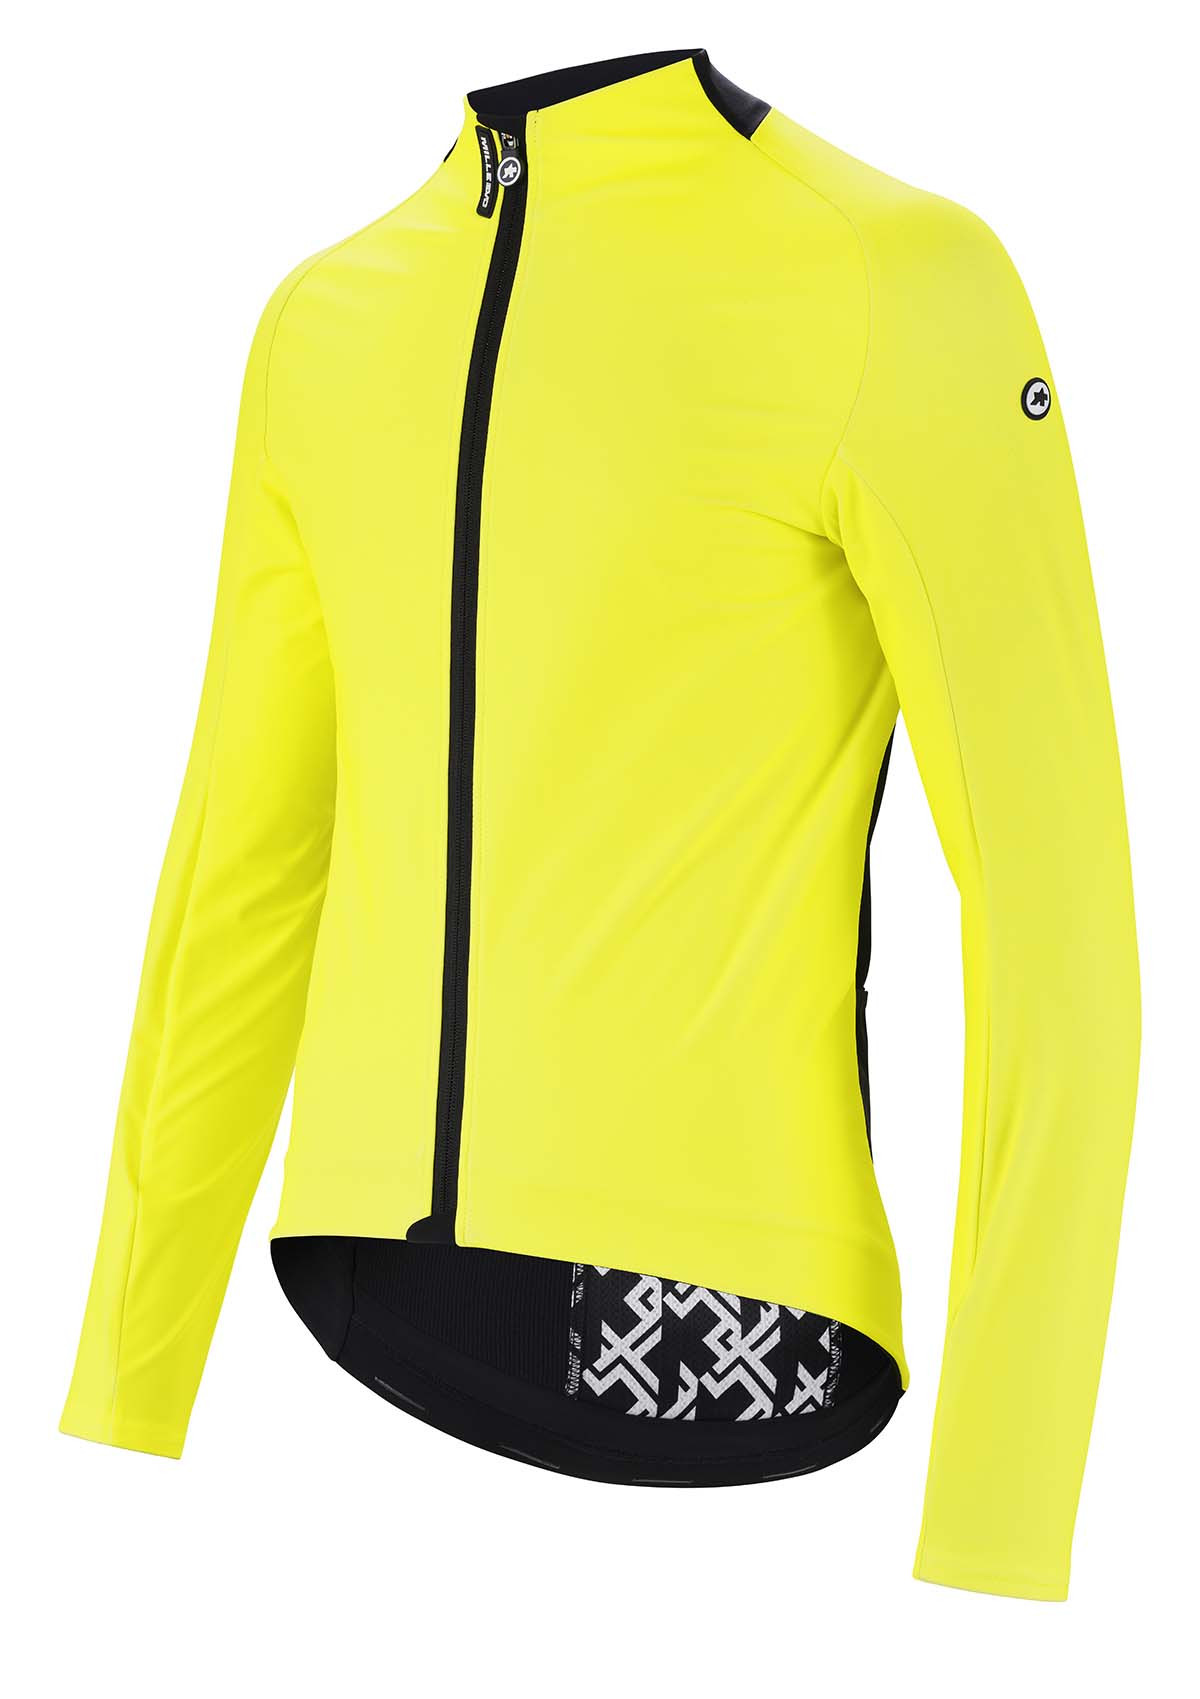 Assos Mille Gt Ultraz Winter Jacket Evo  - Fluo Yellow